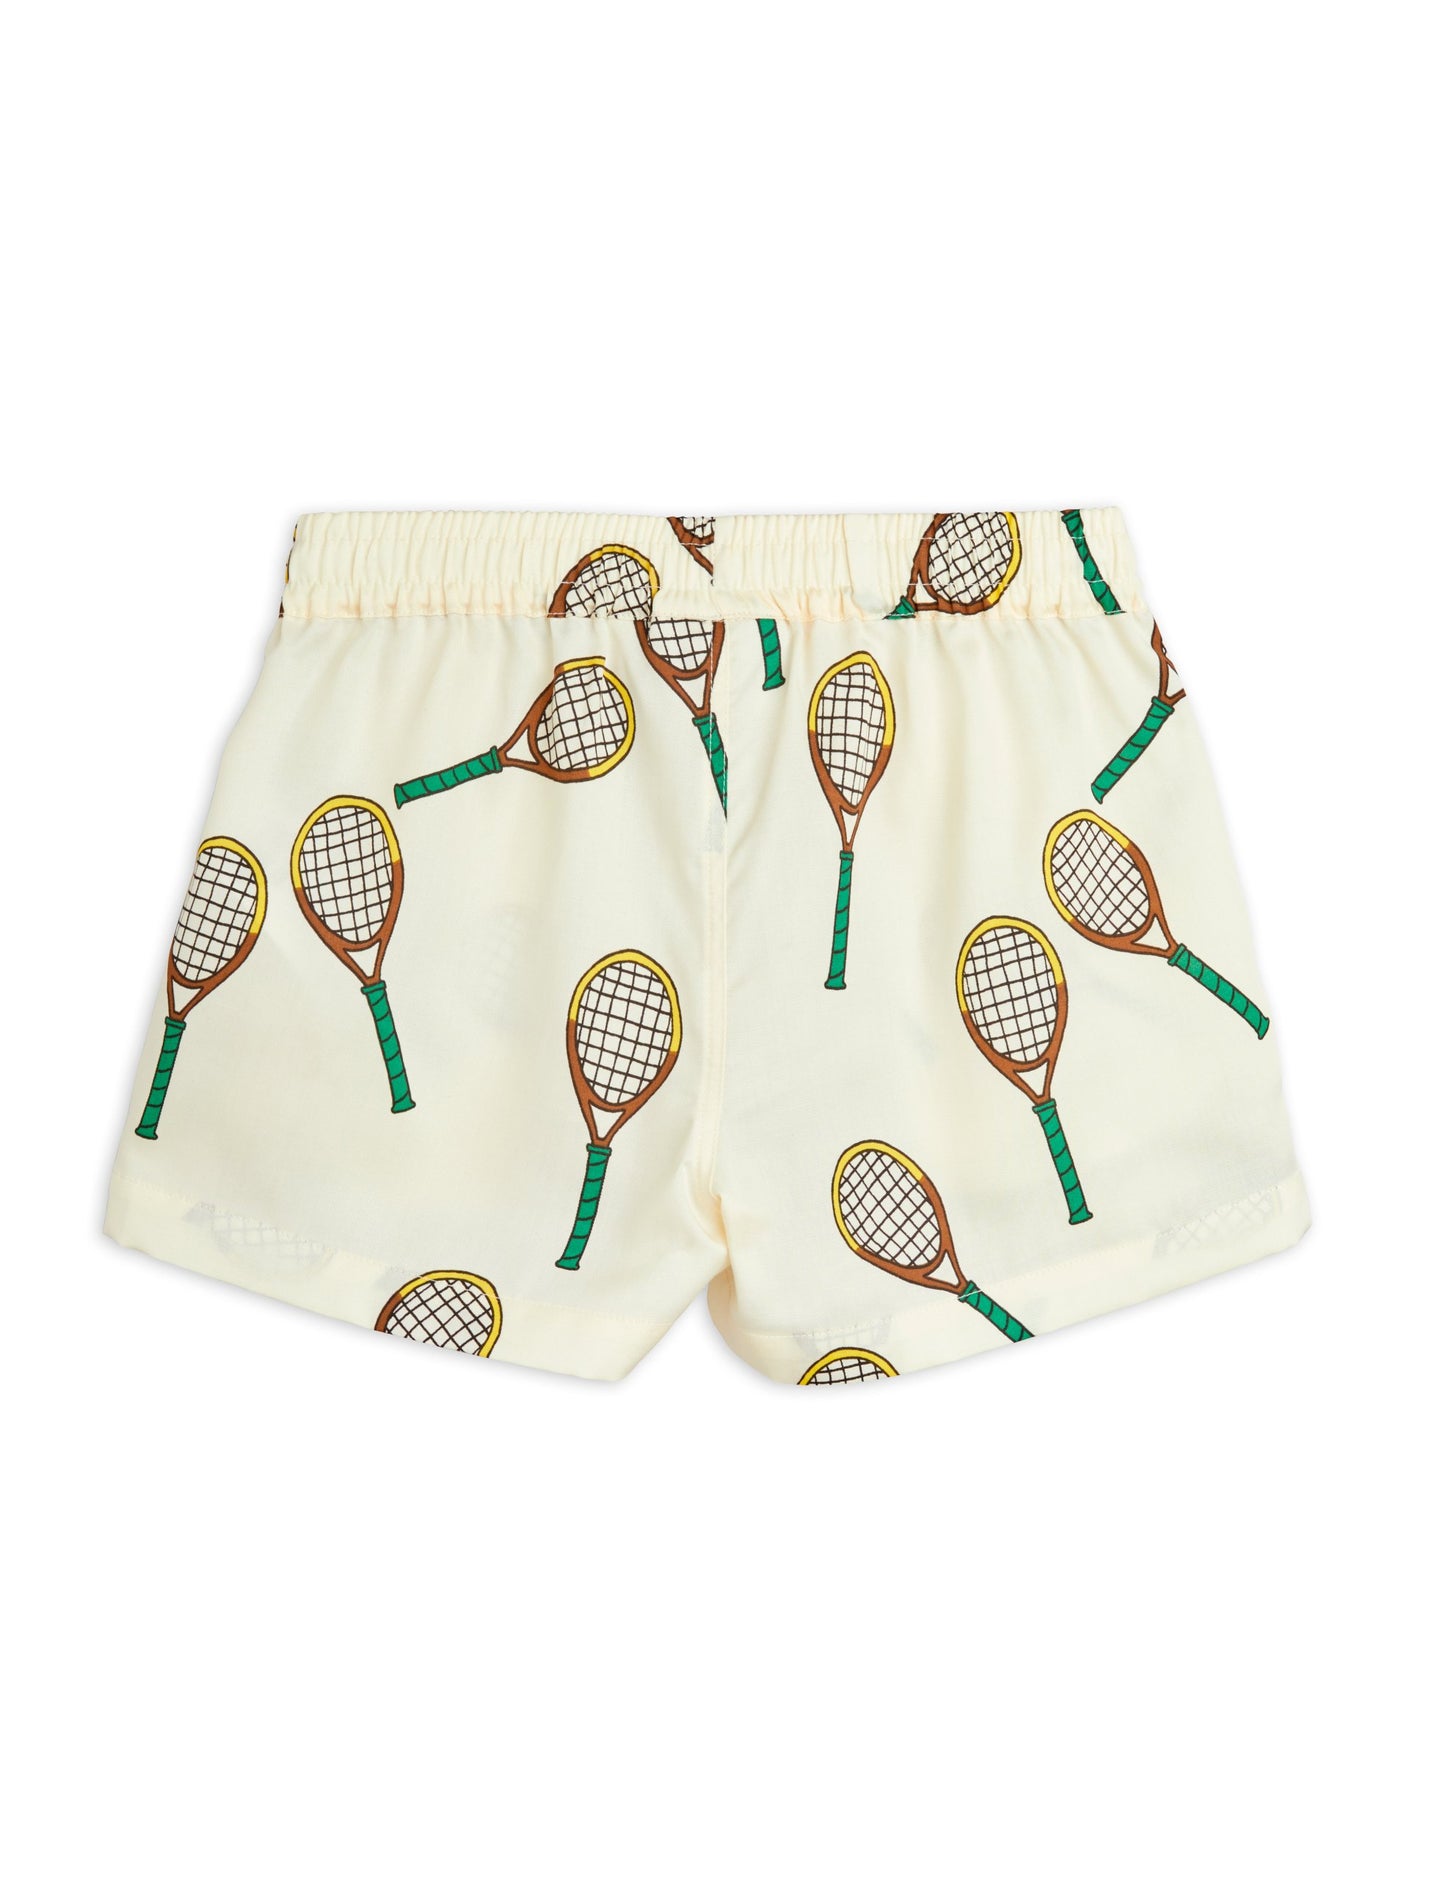 Tennis woven shorts